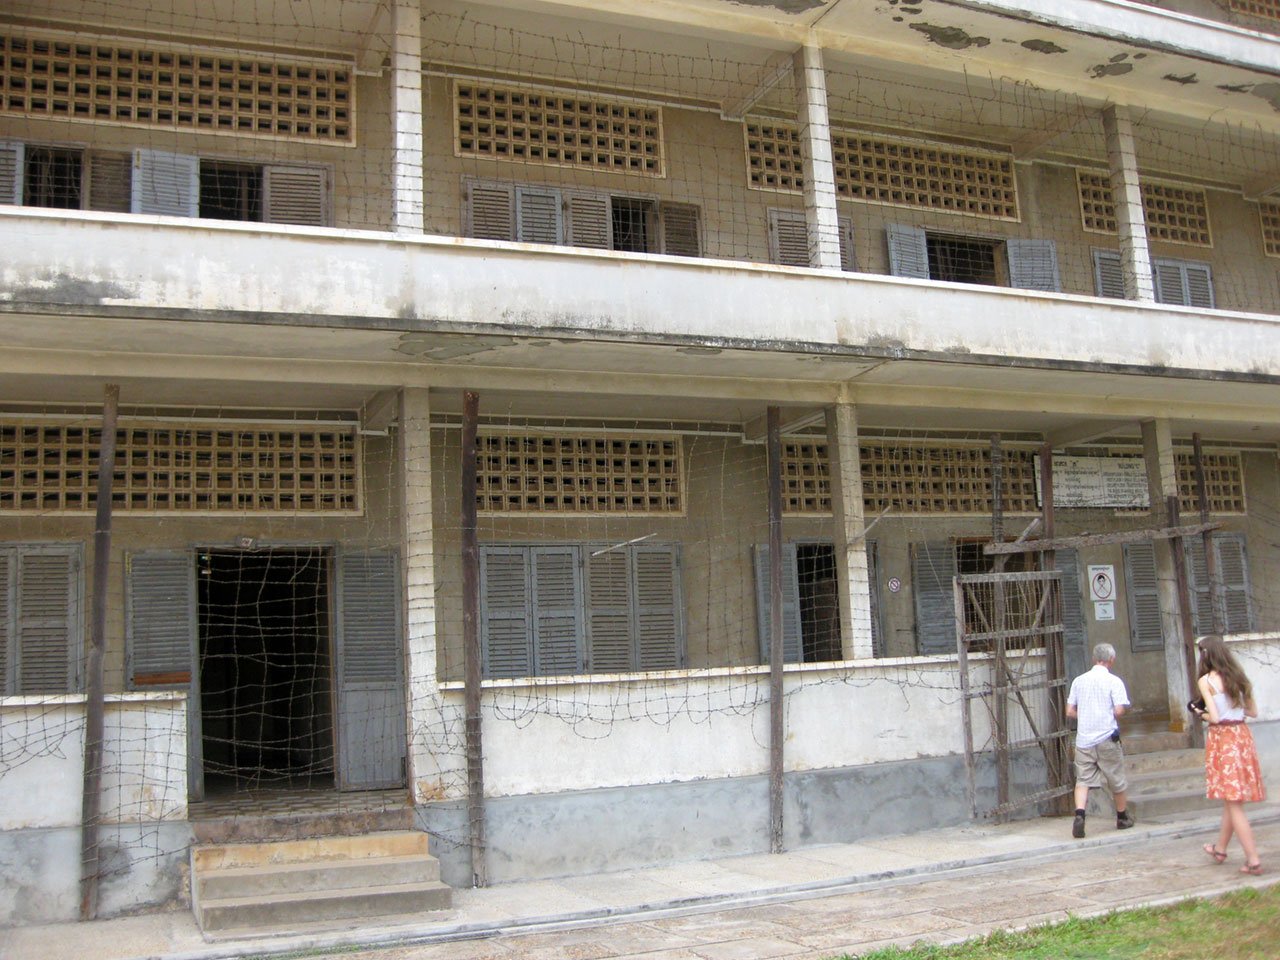 Tuol Sleng prison, Phnom Penh, Cambodia